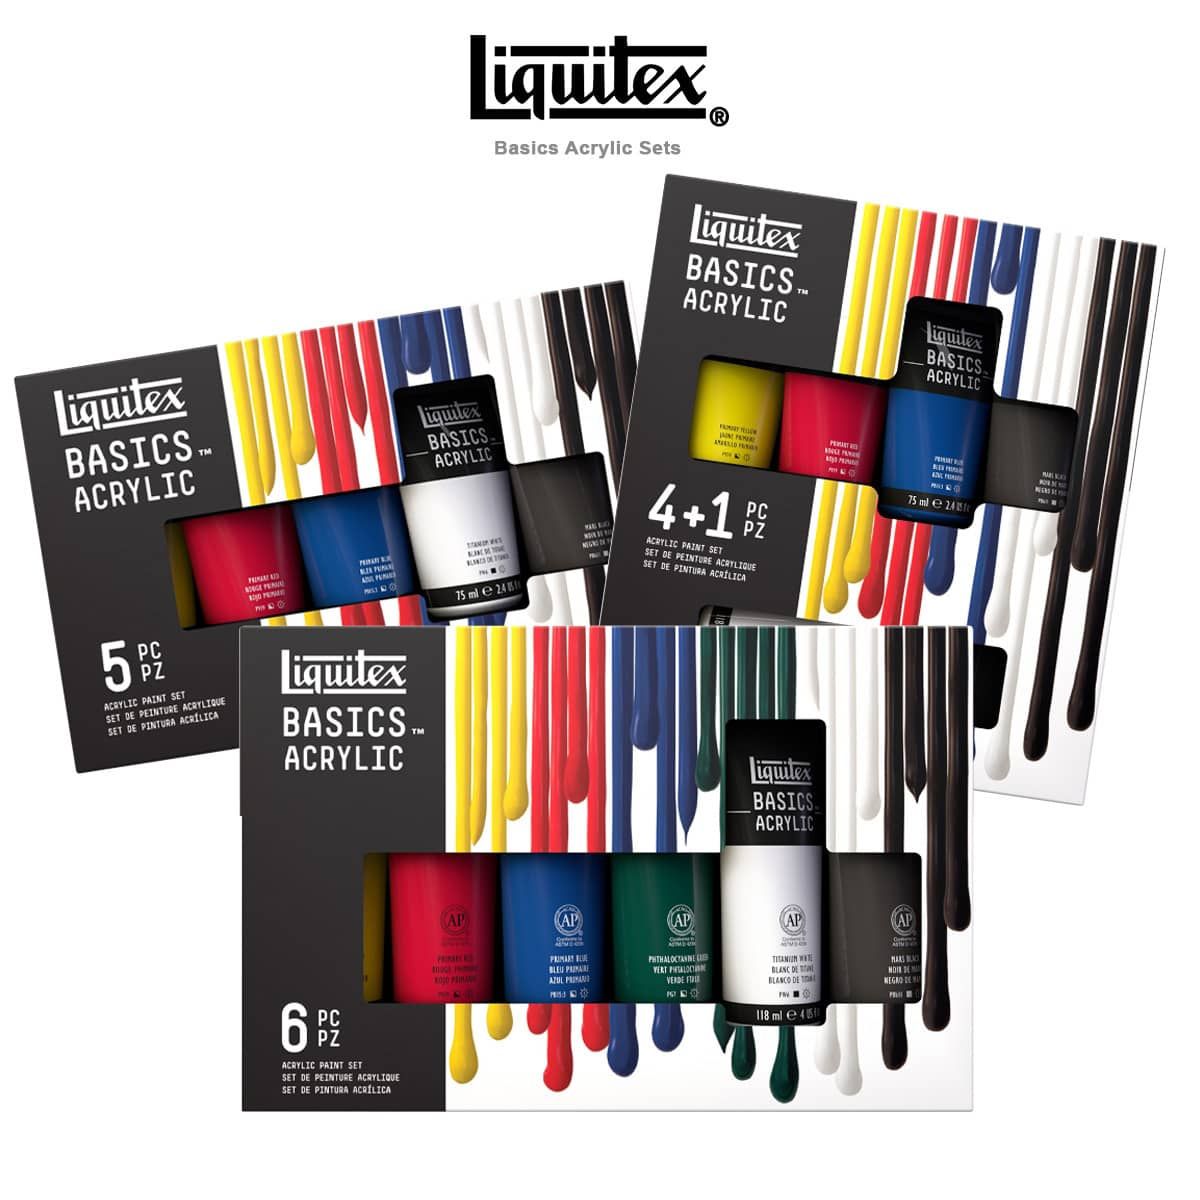 Liquitex Basics Acrylic Colors – Rileystreet Art Supply